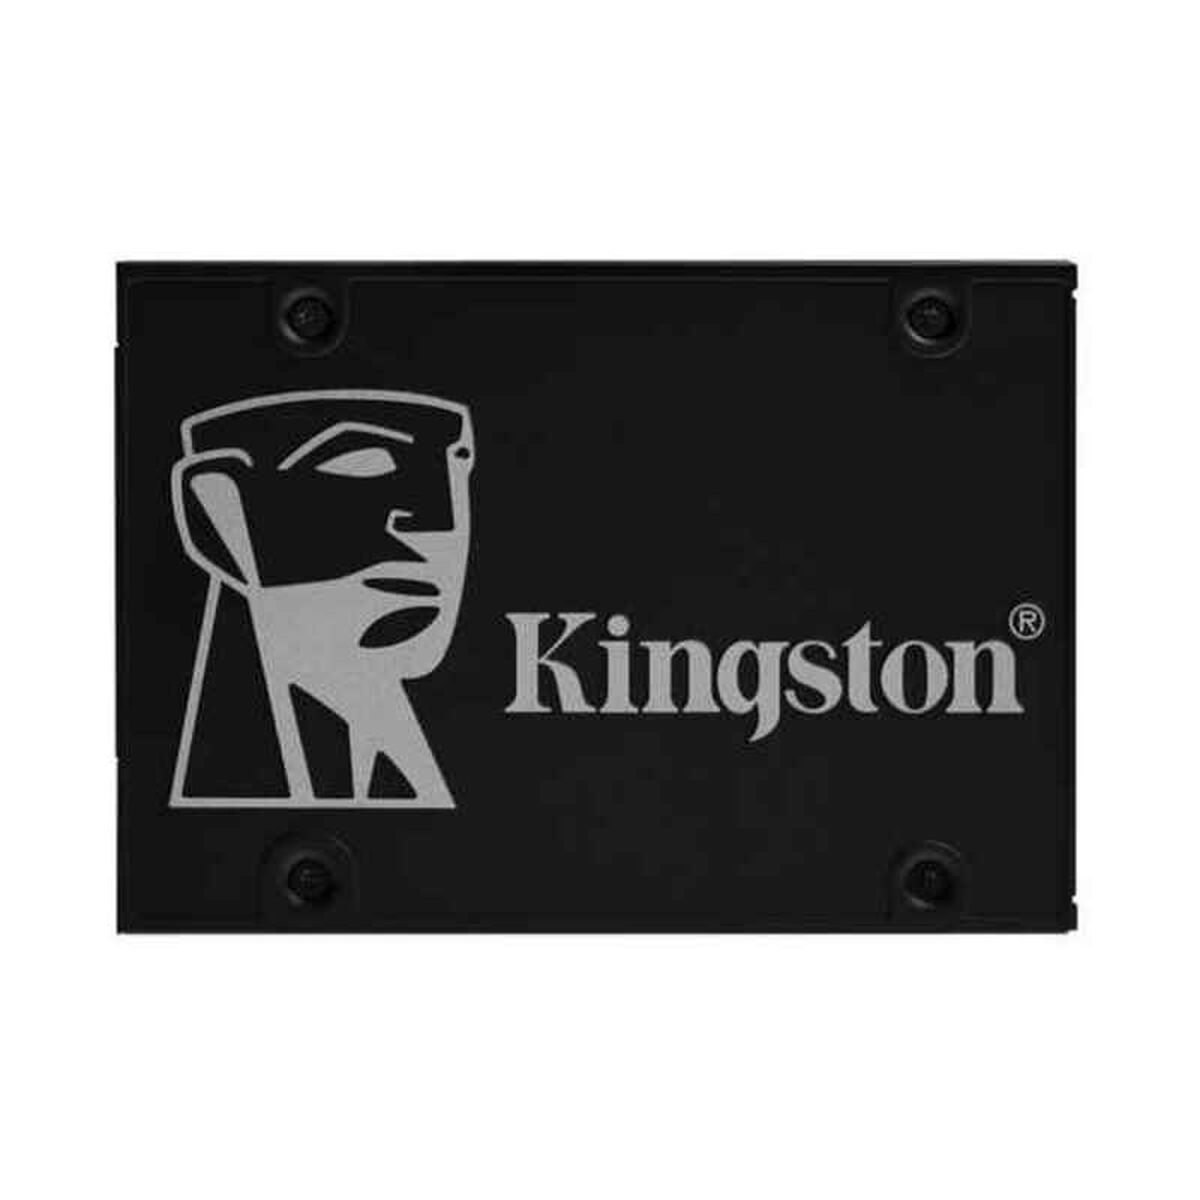 Hard Disk Kingston KC600 256 GB SSD